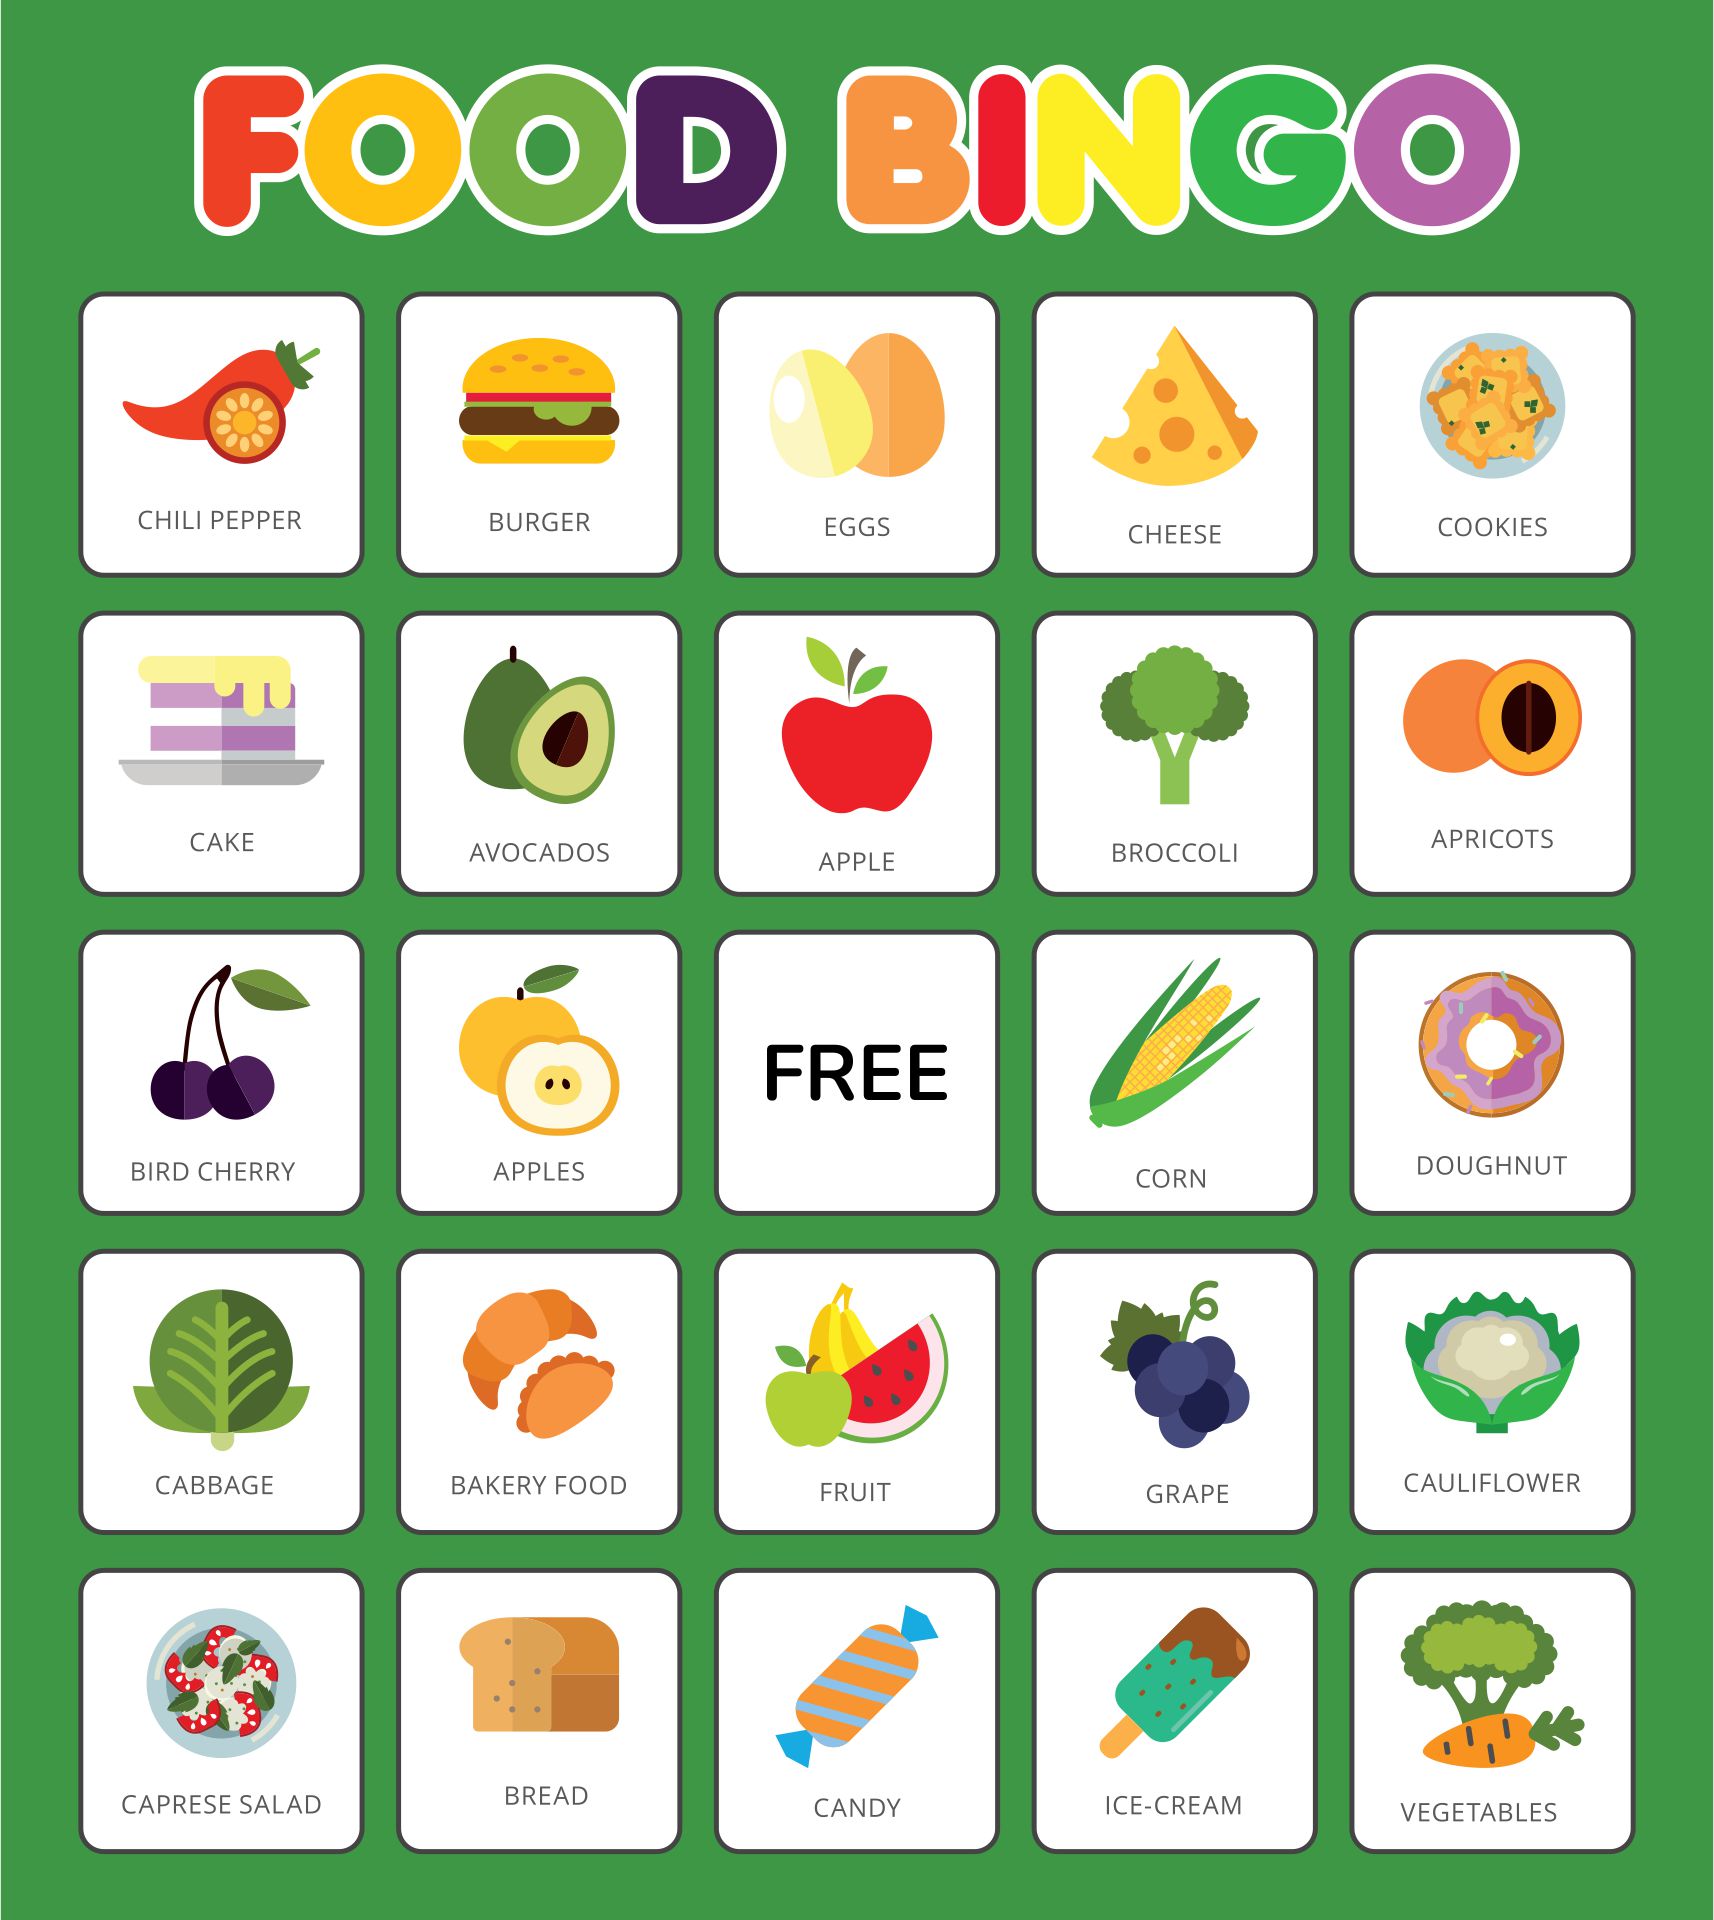 Food Bingo Cards for Kids